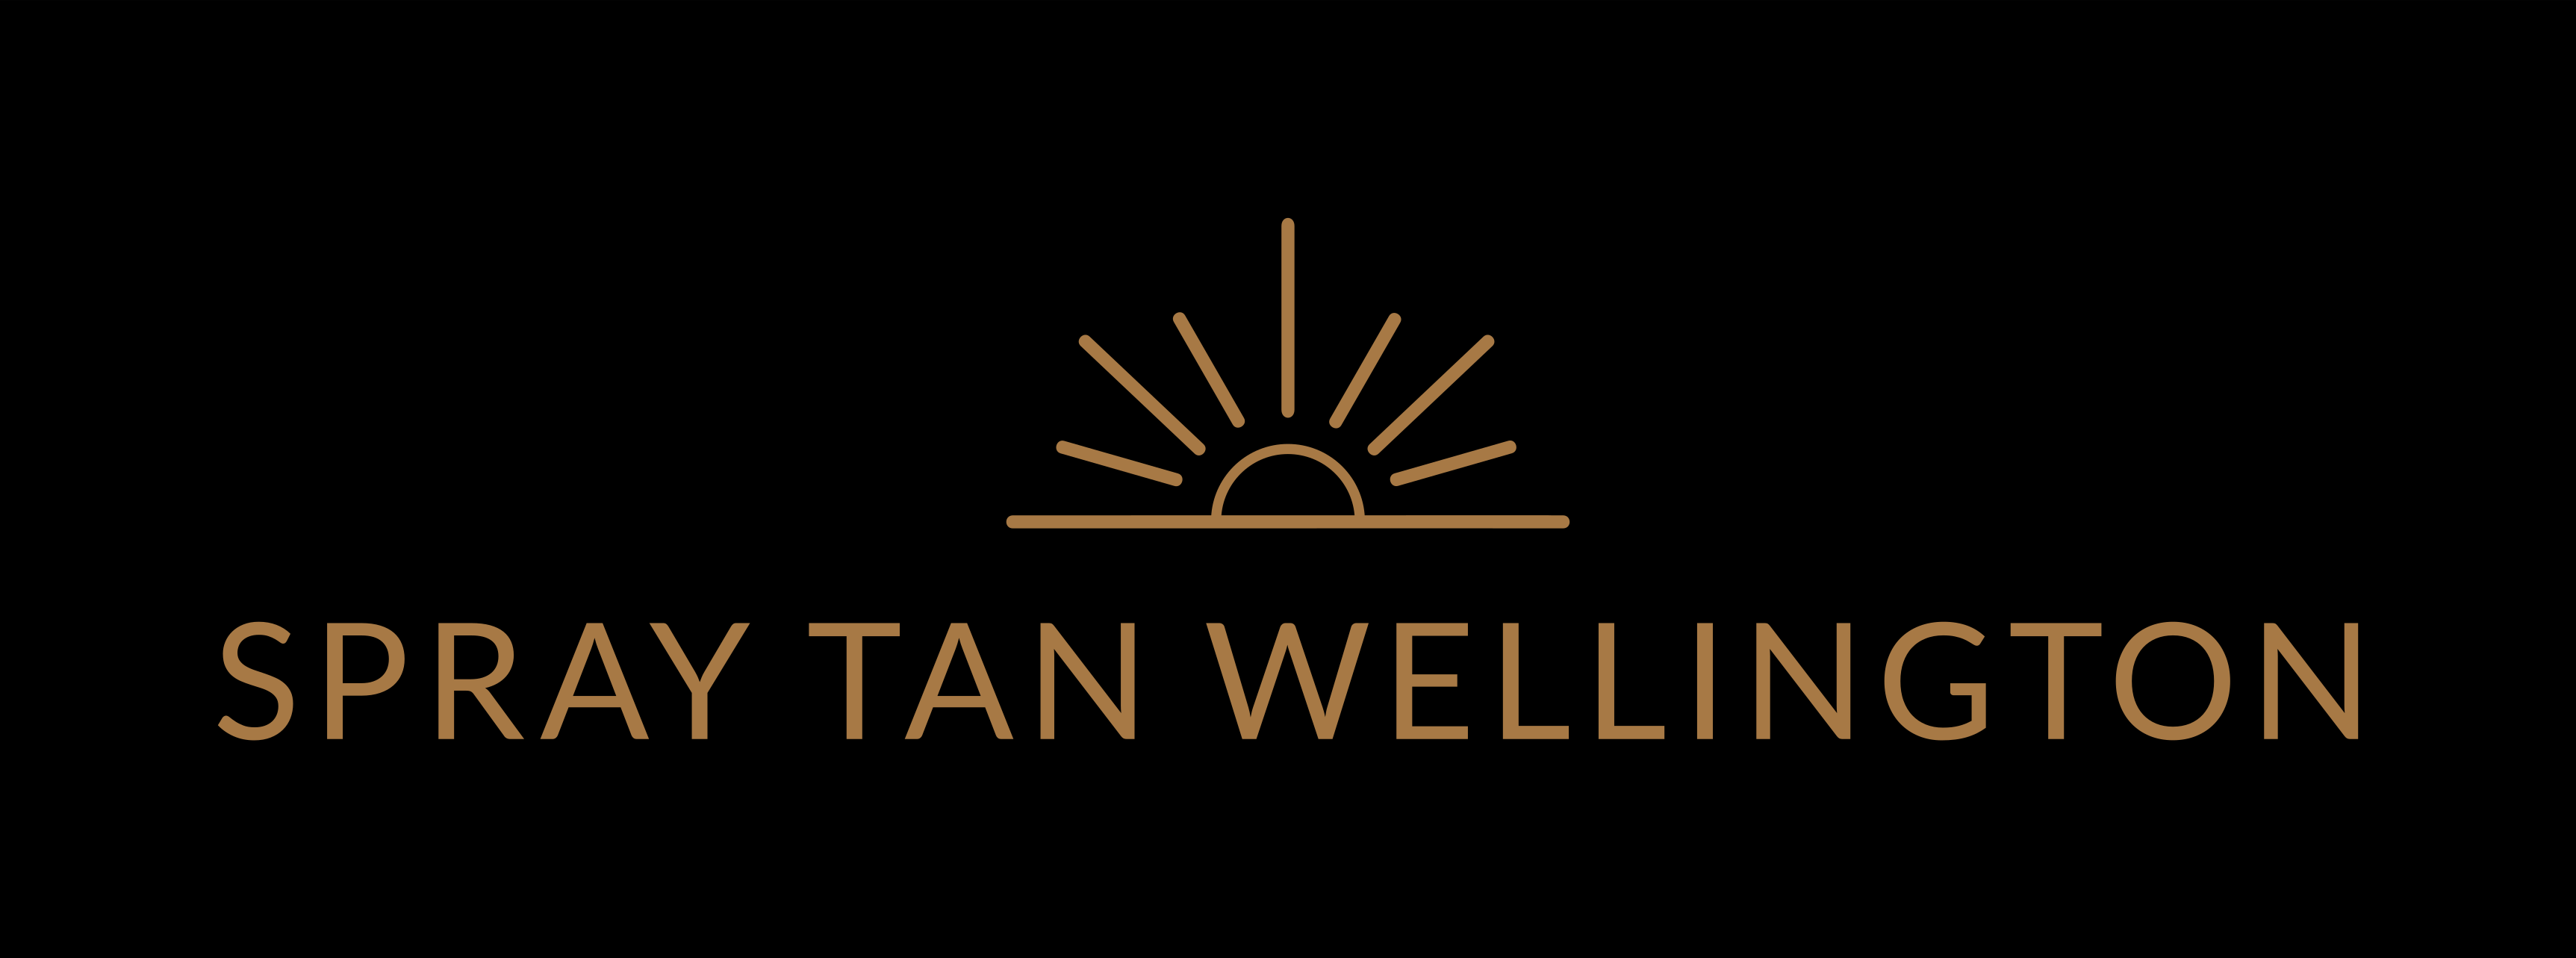 Spray Tan Wellington logo